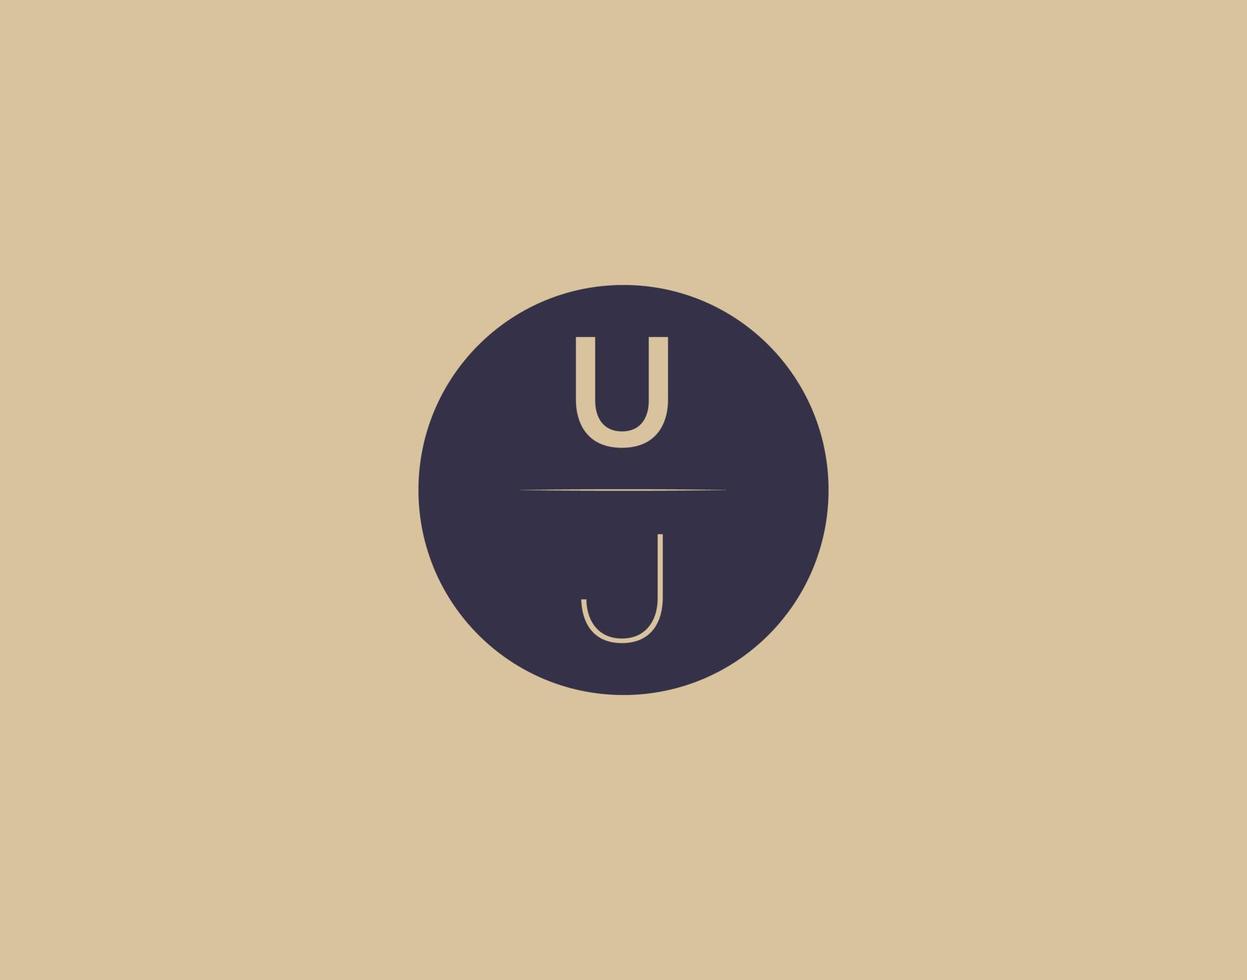 UJ letter modern elegant logo design vector images